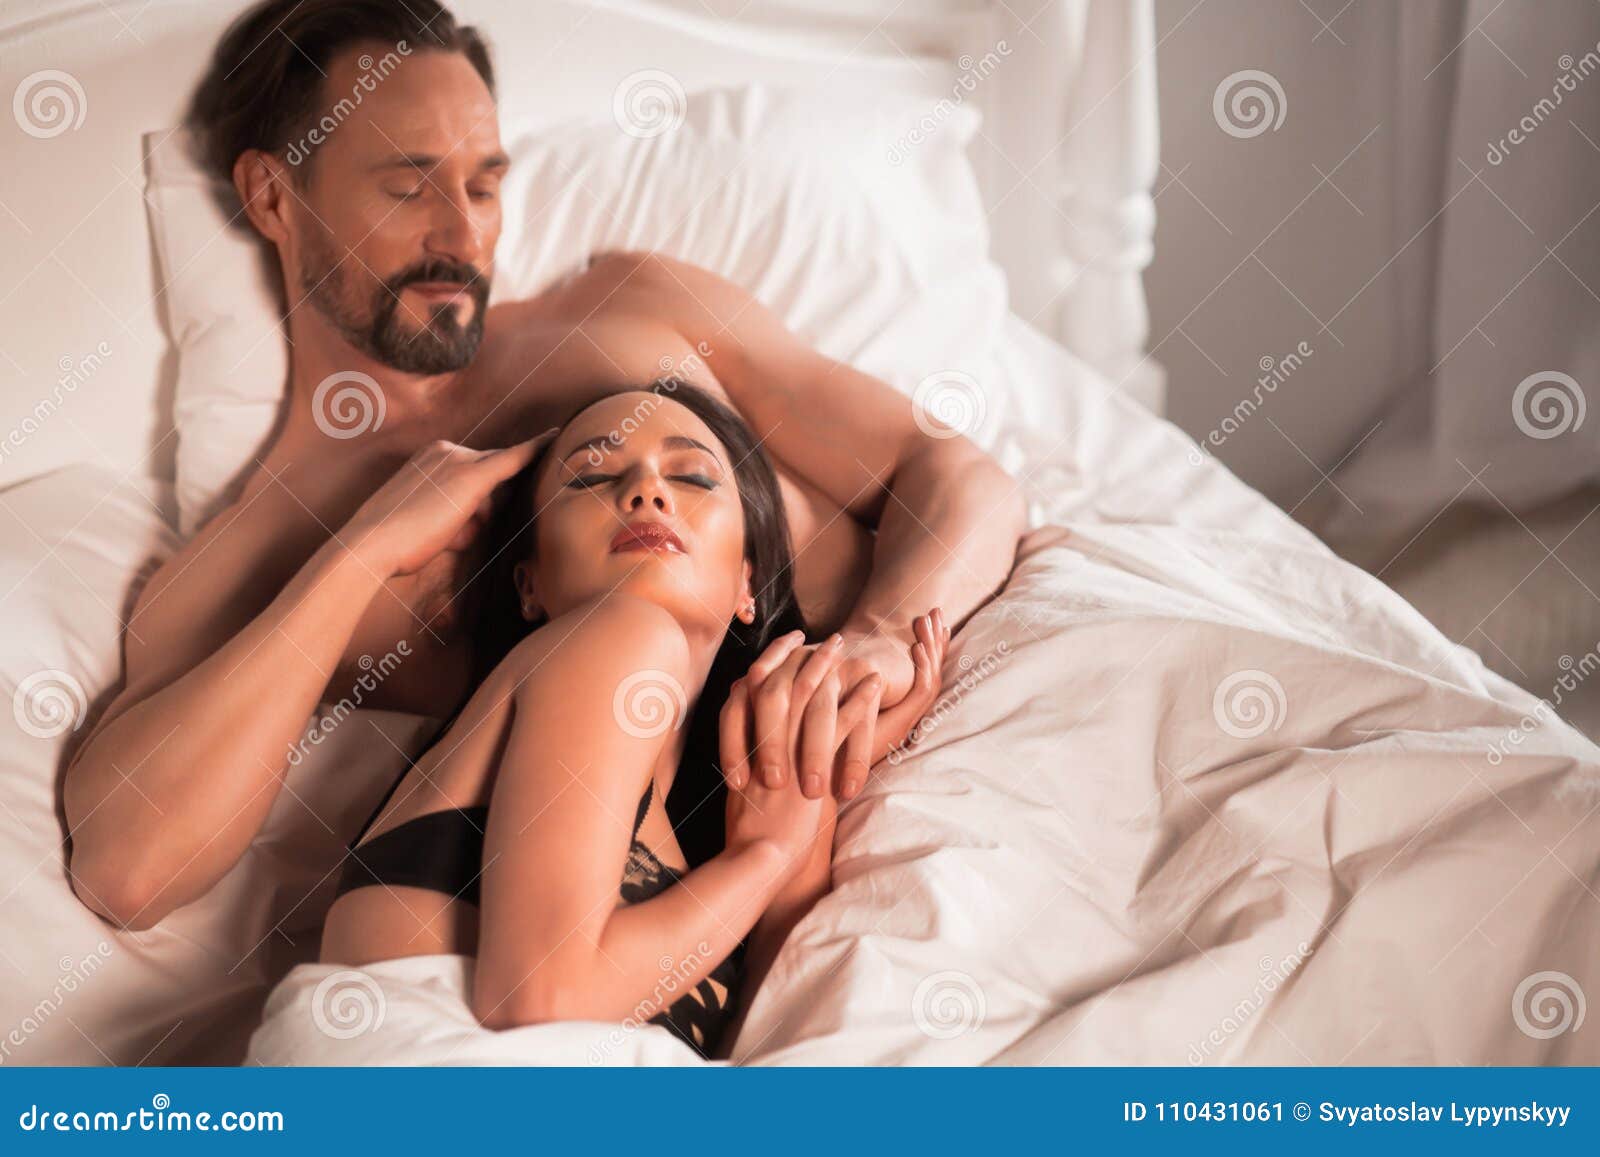 Young Love Couple In Bed Romantic Scene In Bedroom Stock